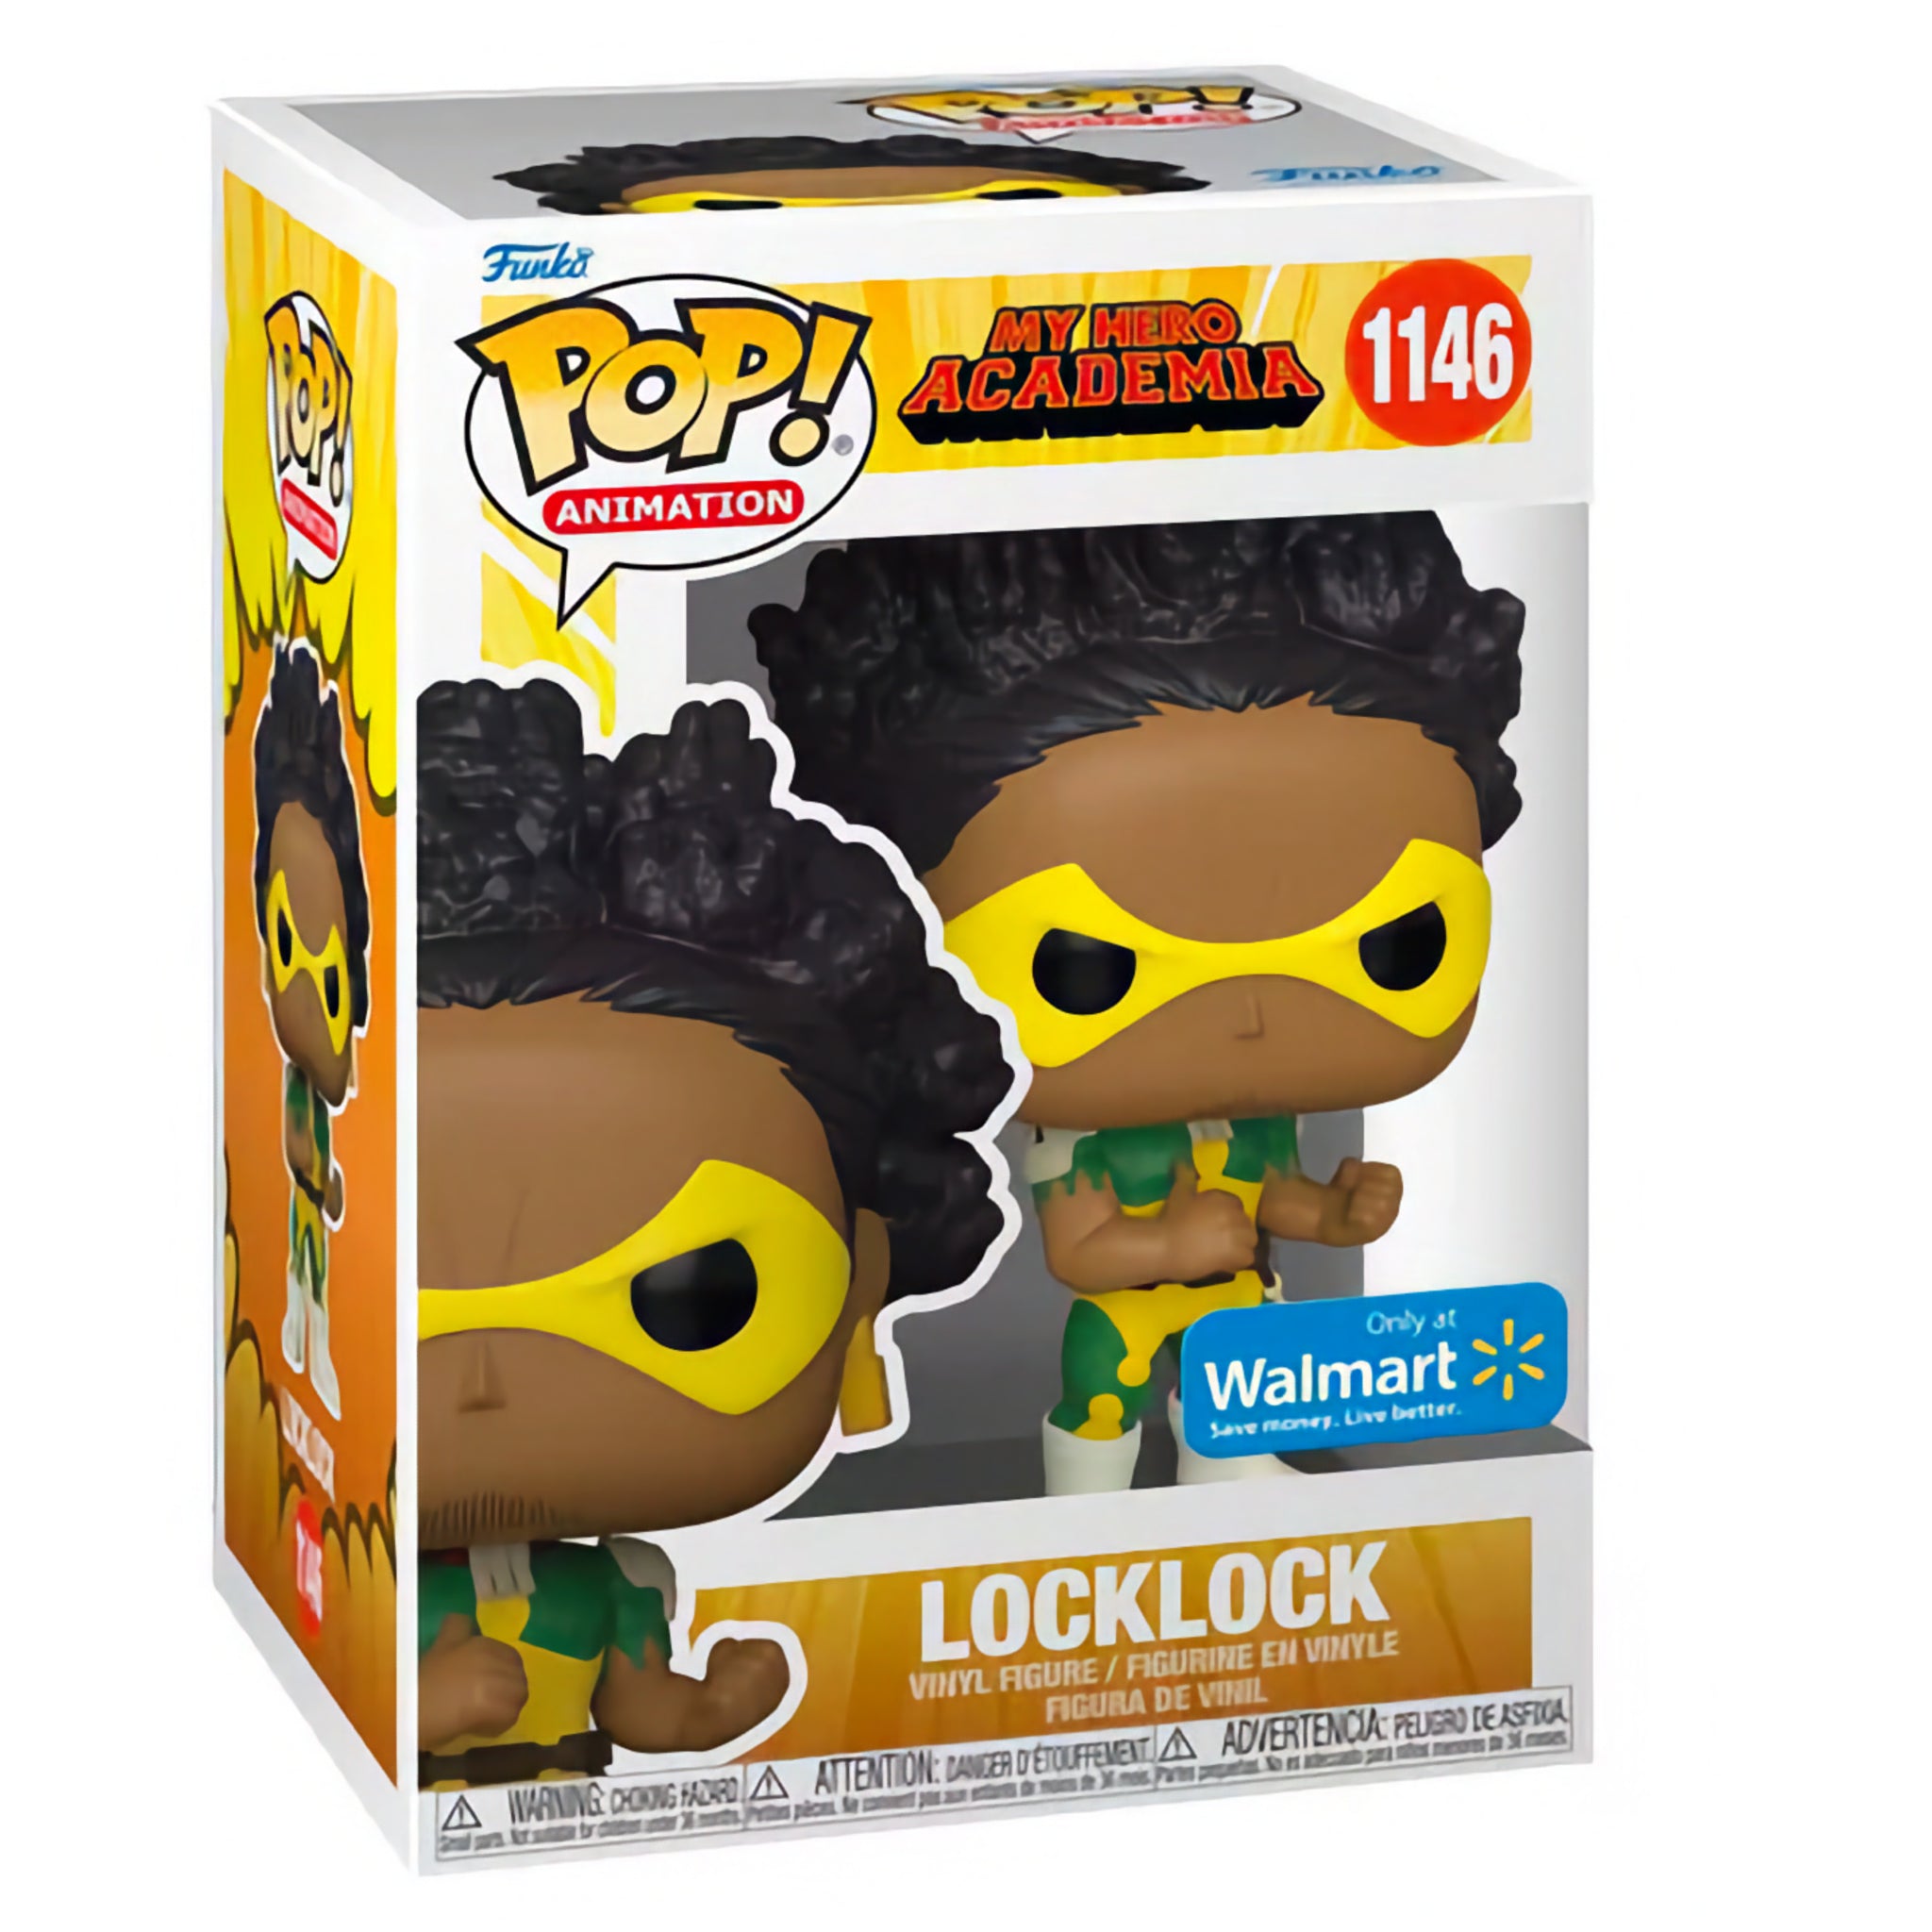 LockLock Funko Pop! WALMART EXCLUSIVE